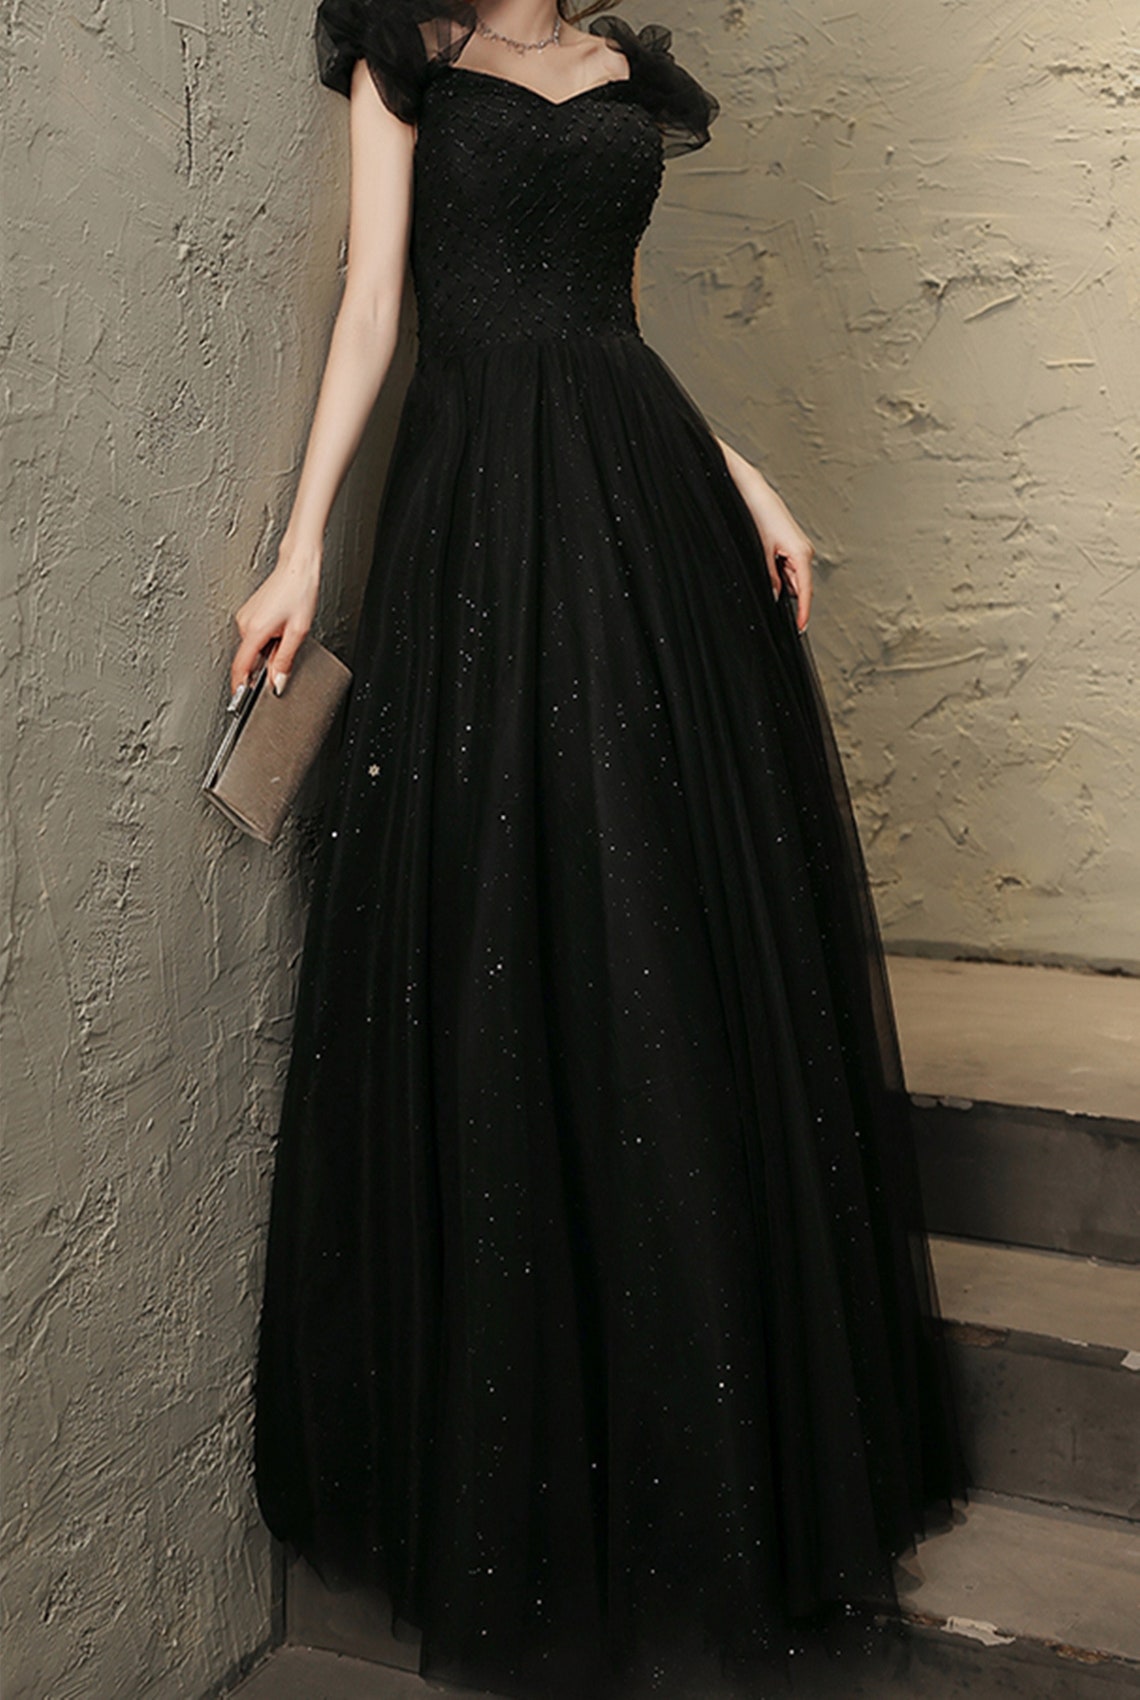 Black Starry Prom Dress Girl Sparkly Party Dress Sleeveless - Etsy